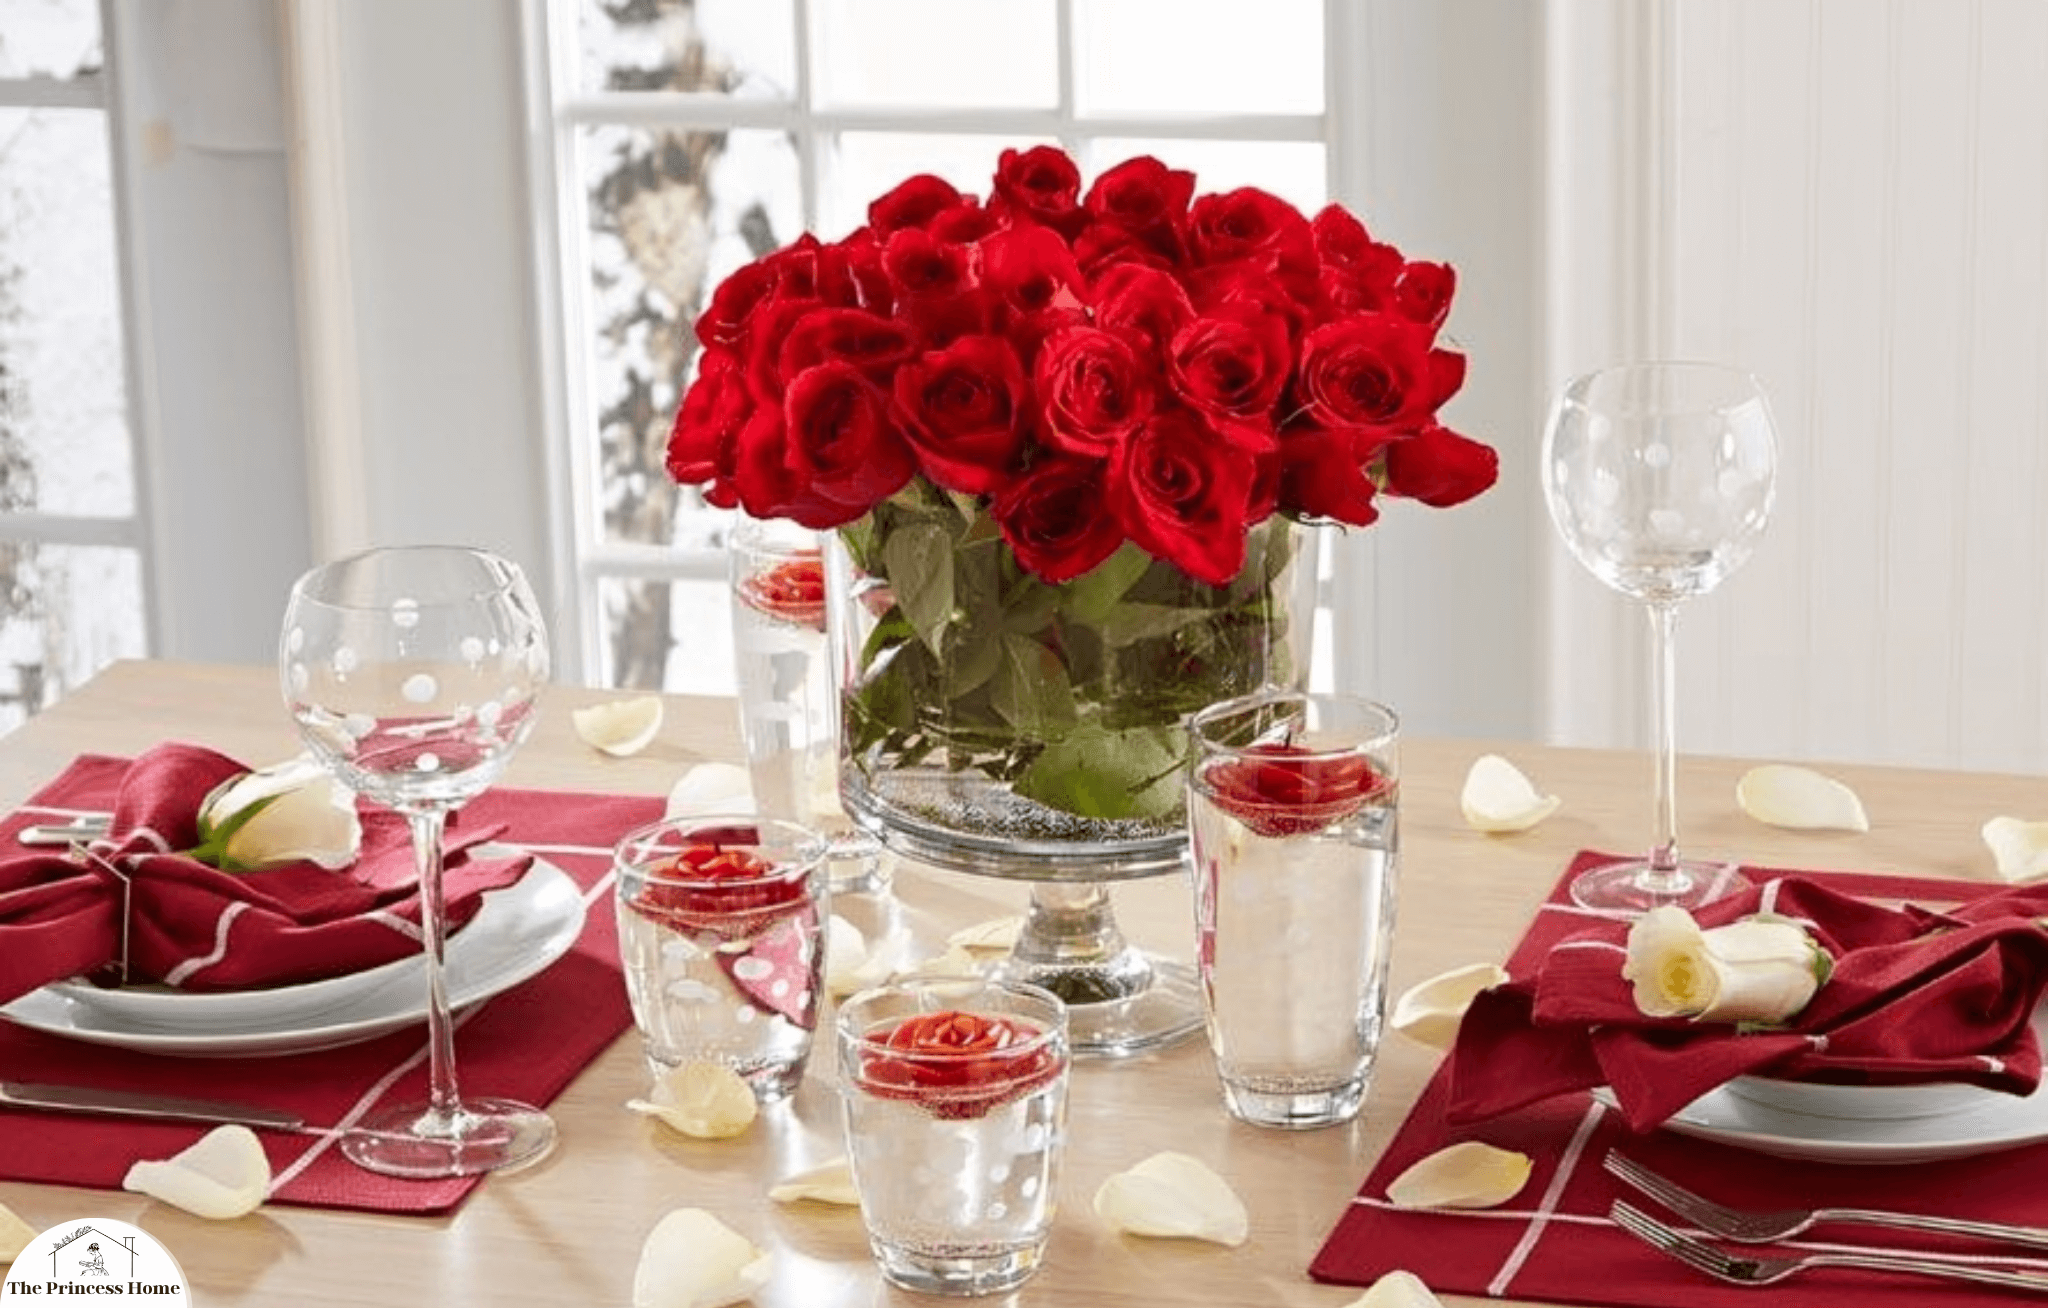 1.Red Roses - Symbol of Love: